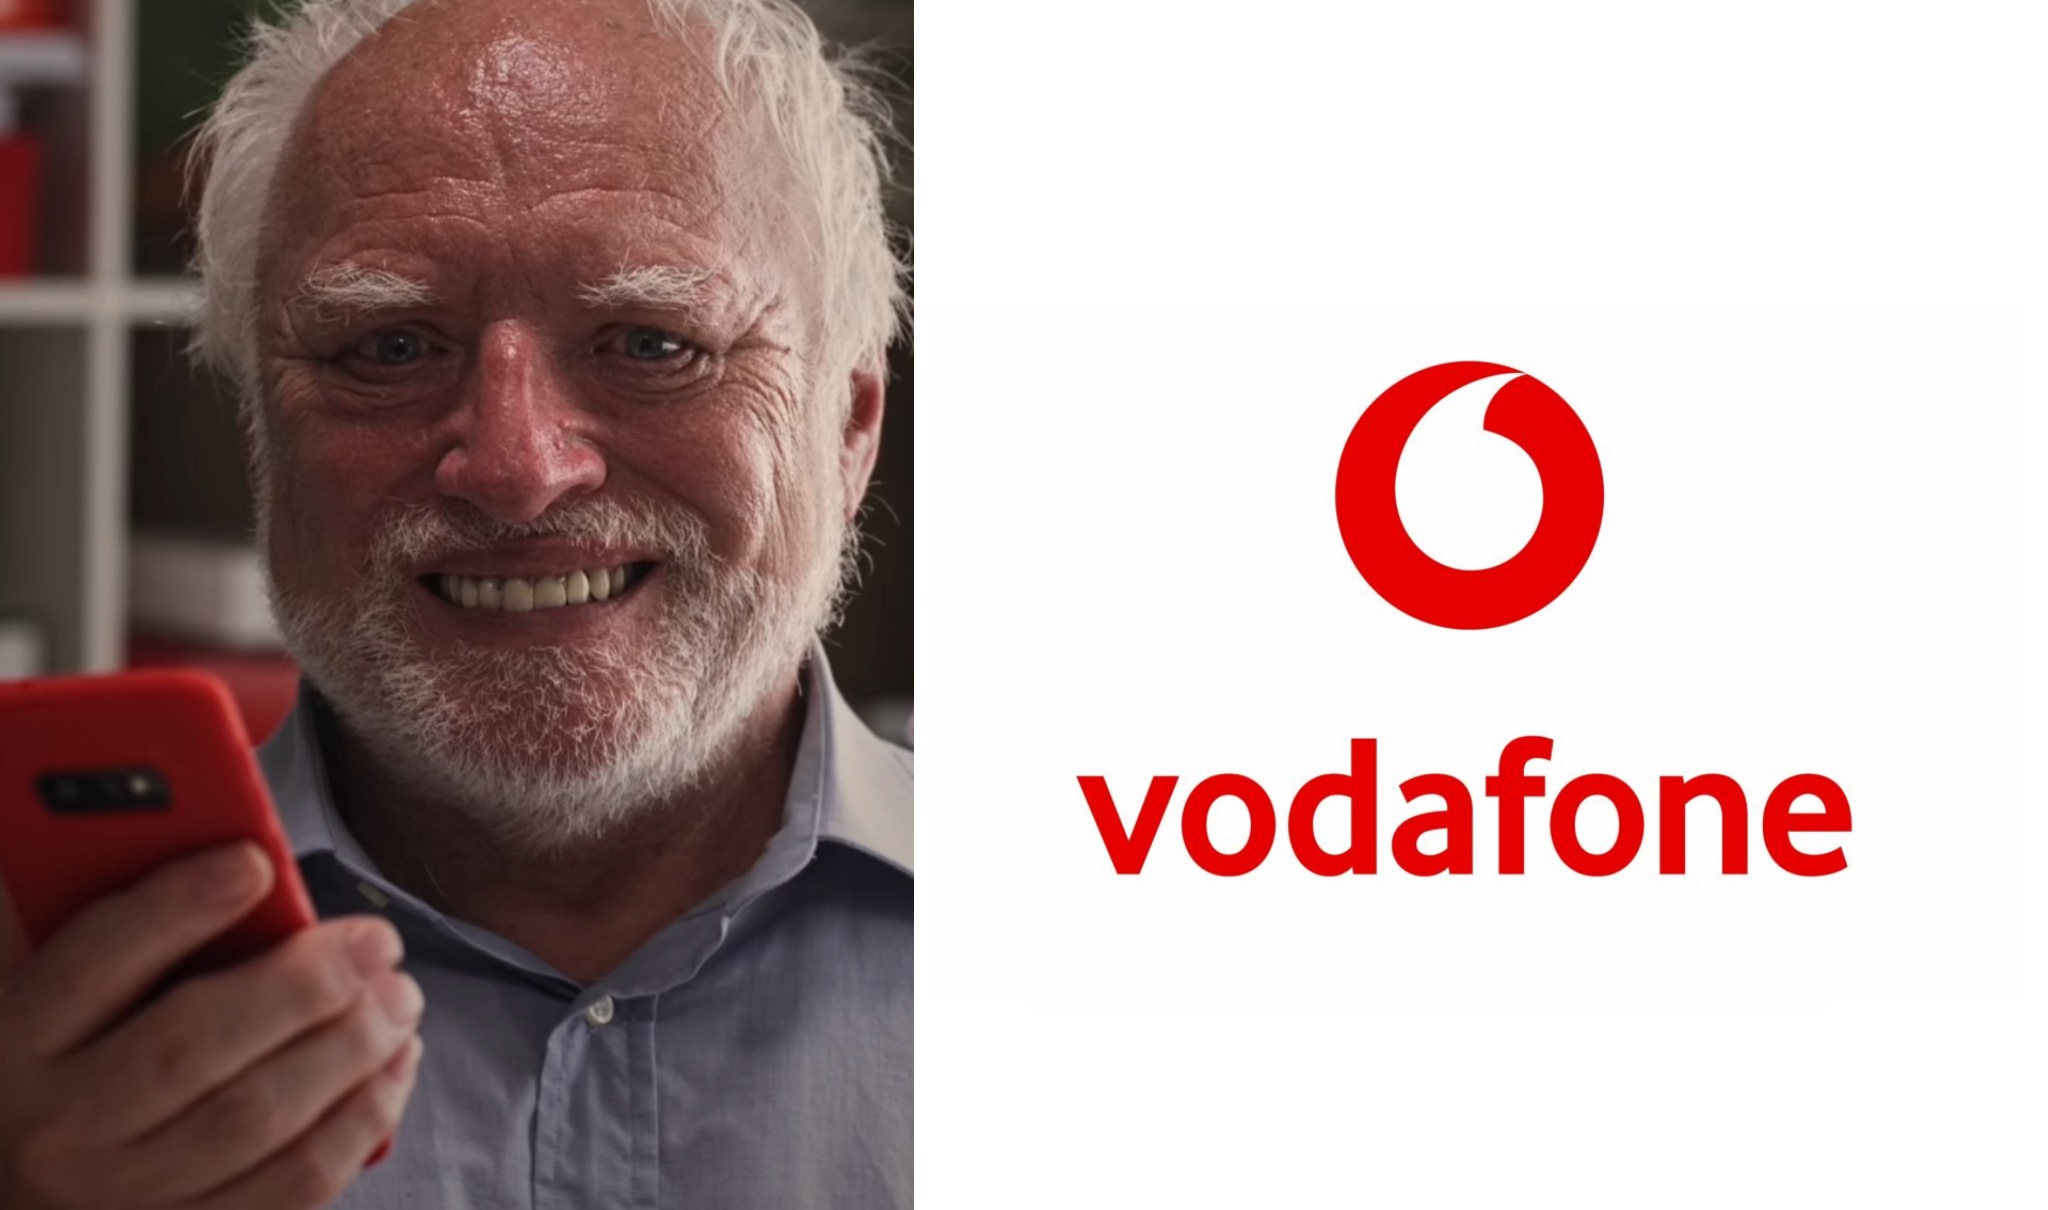 Hide the pain Harold Vodafone